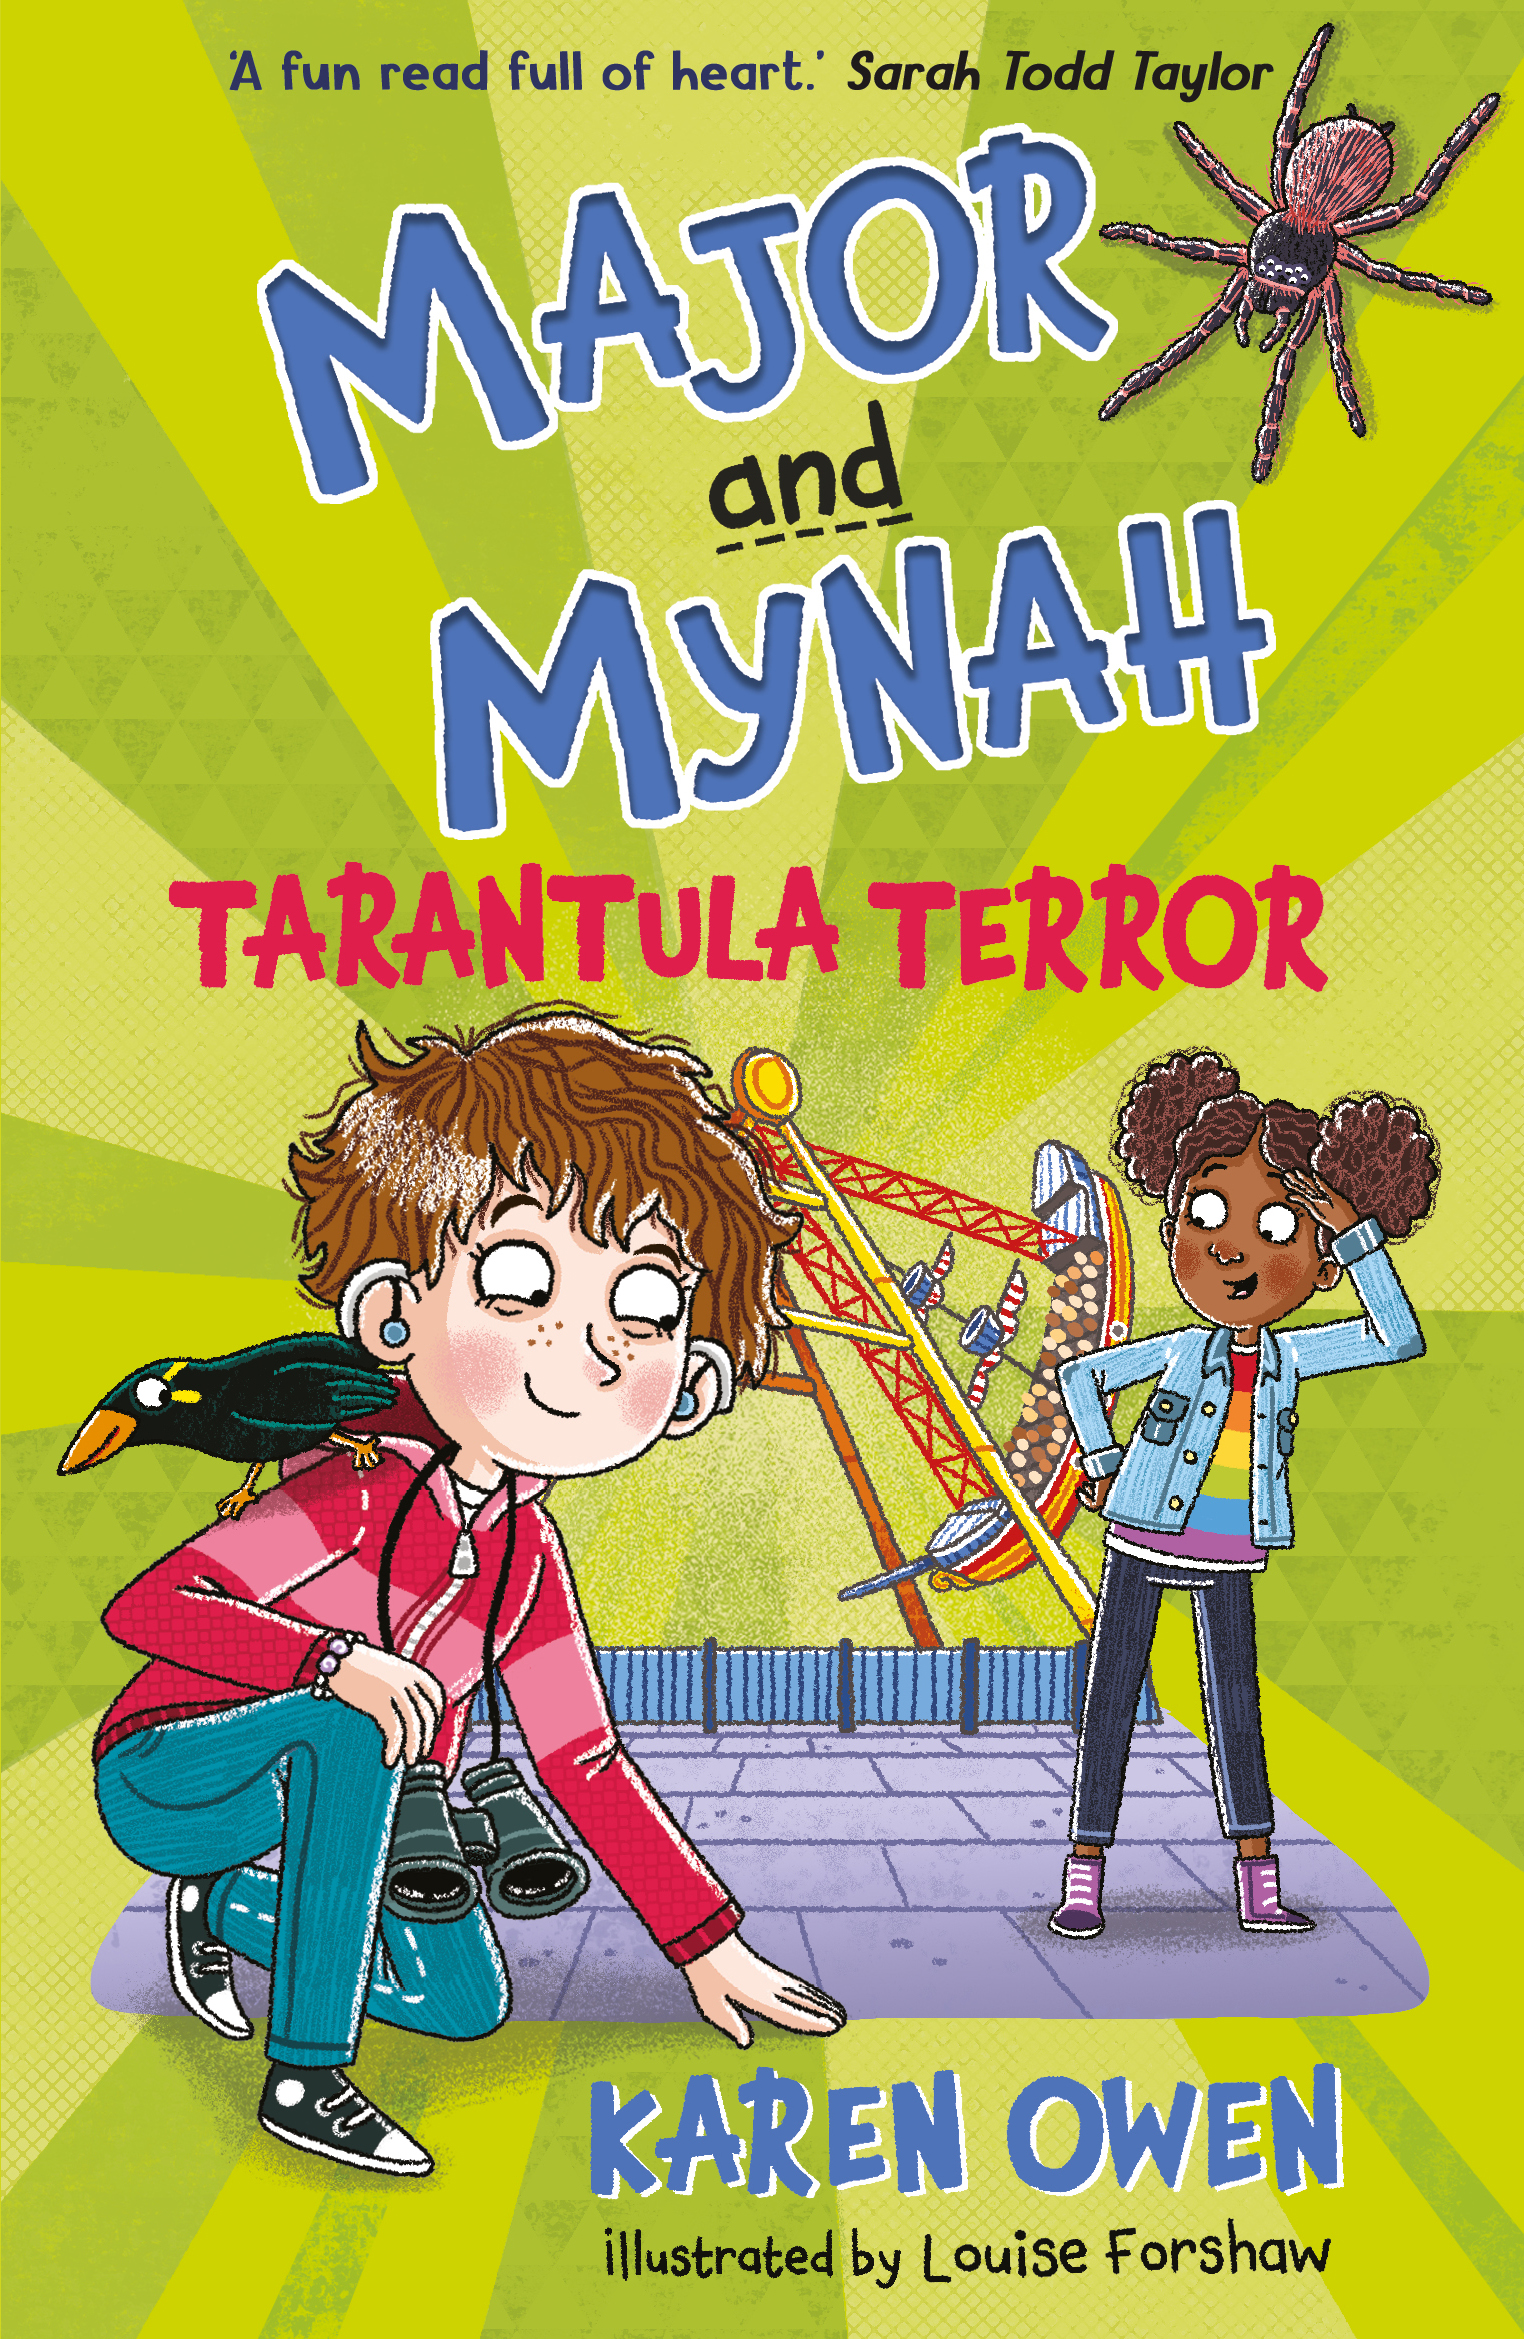 Major and Mynah Tarantula Terror